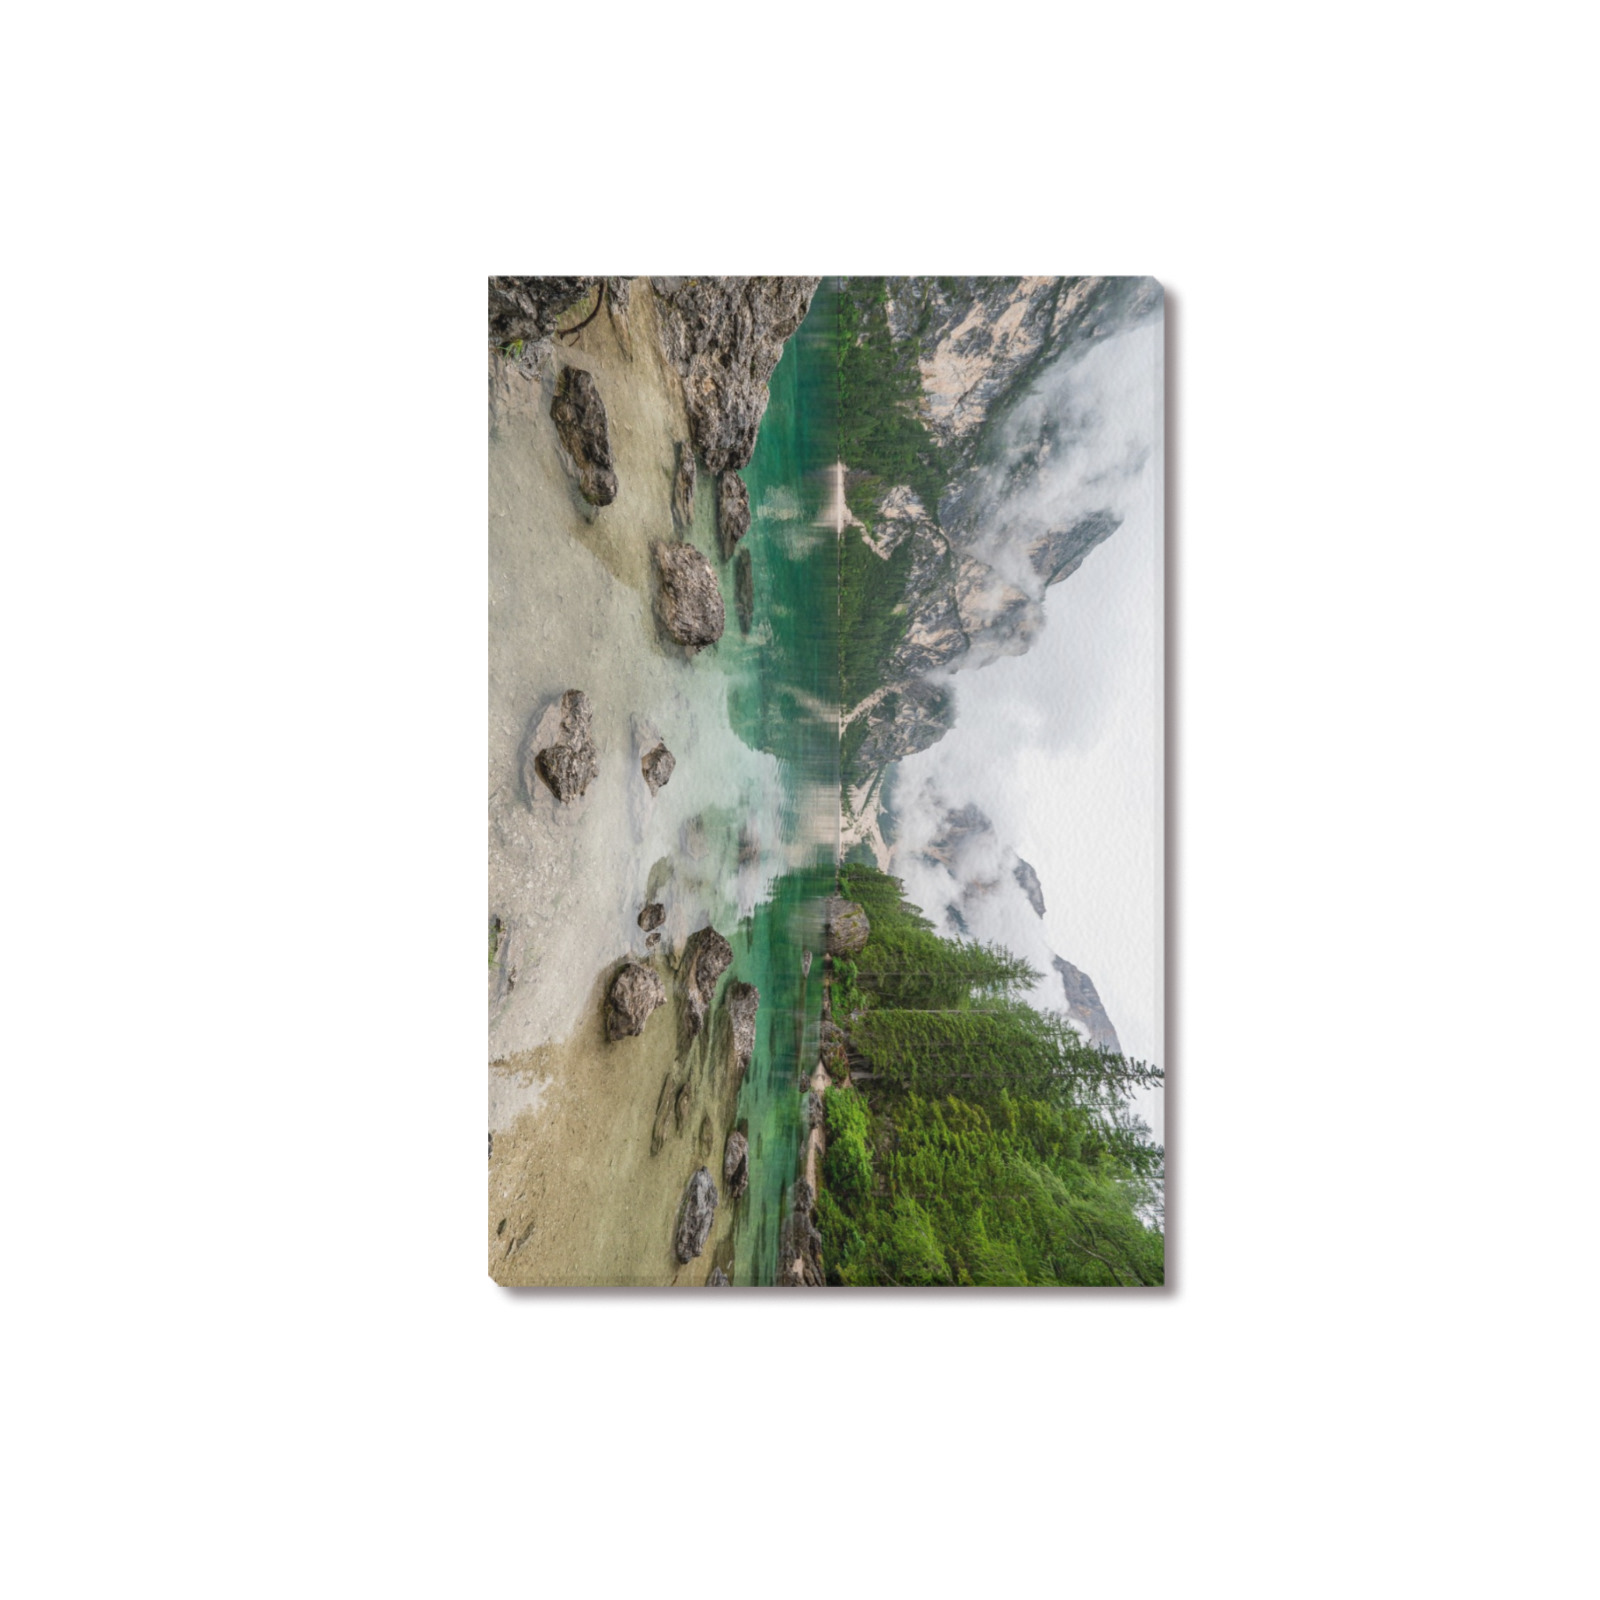 Mountain river Frame Canvas Print 18"x12"